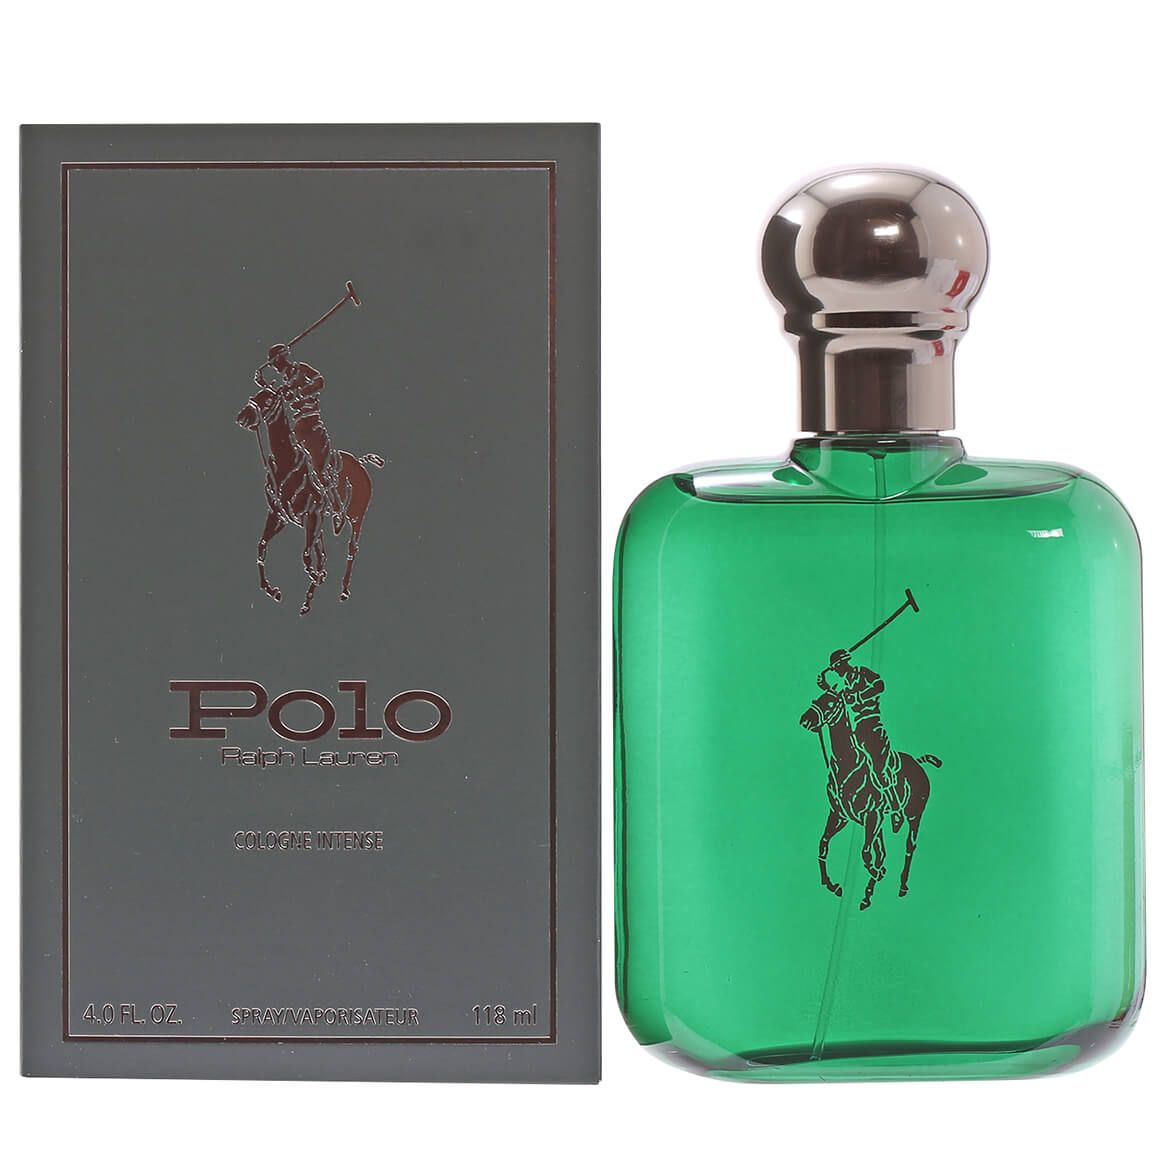 Polo Intense by Ralph Lauren for Men Cologne Spray, 4 fl. oz. + '-' + 377230